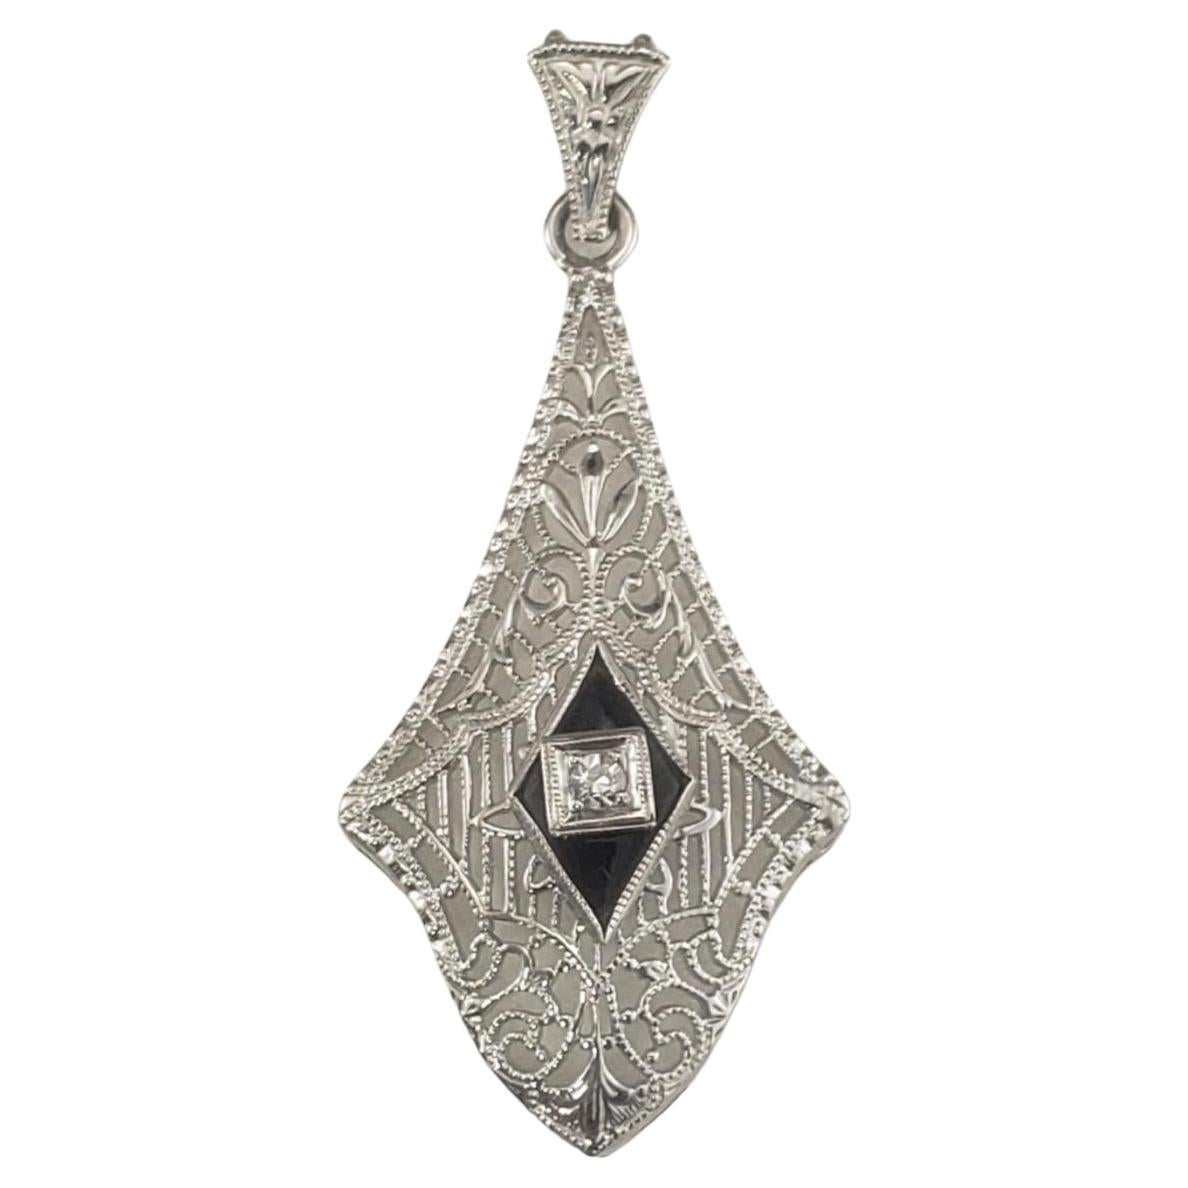 10 Karat White Gold Filigree Onyx and Diamond Pendant #16743 For Sale